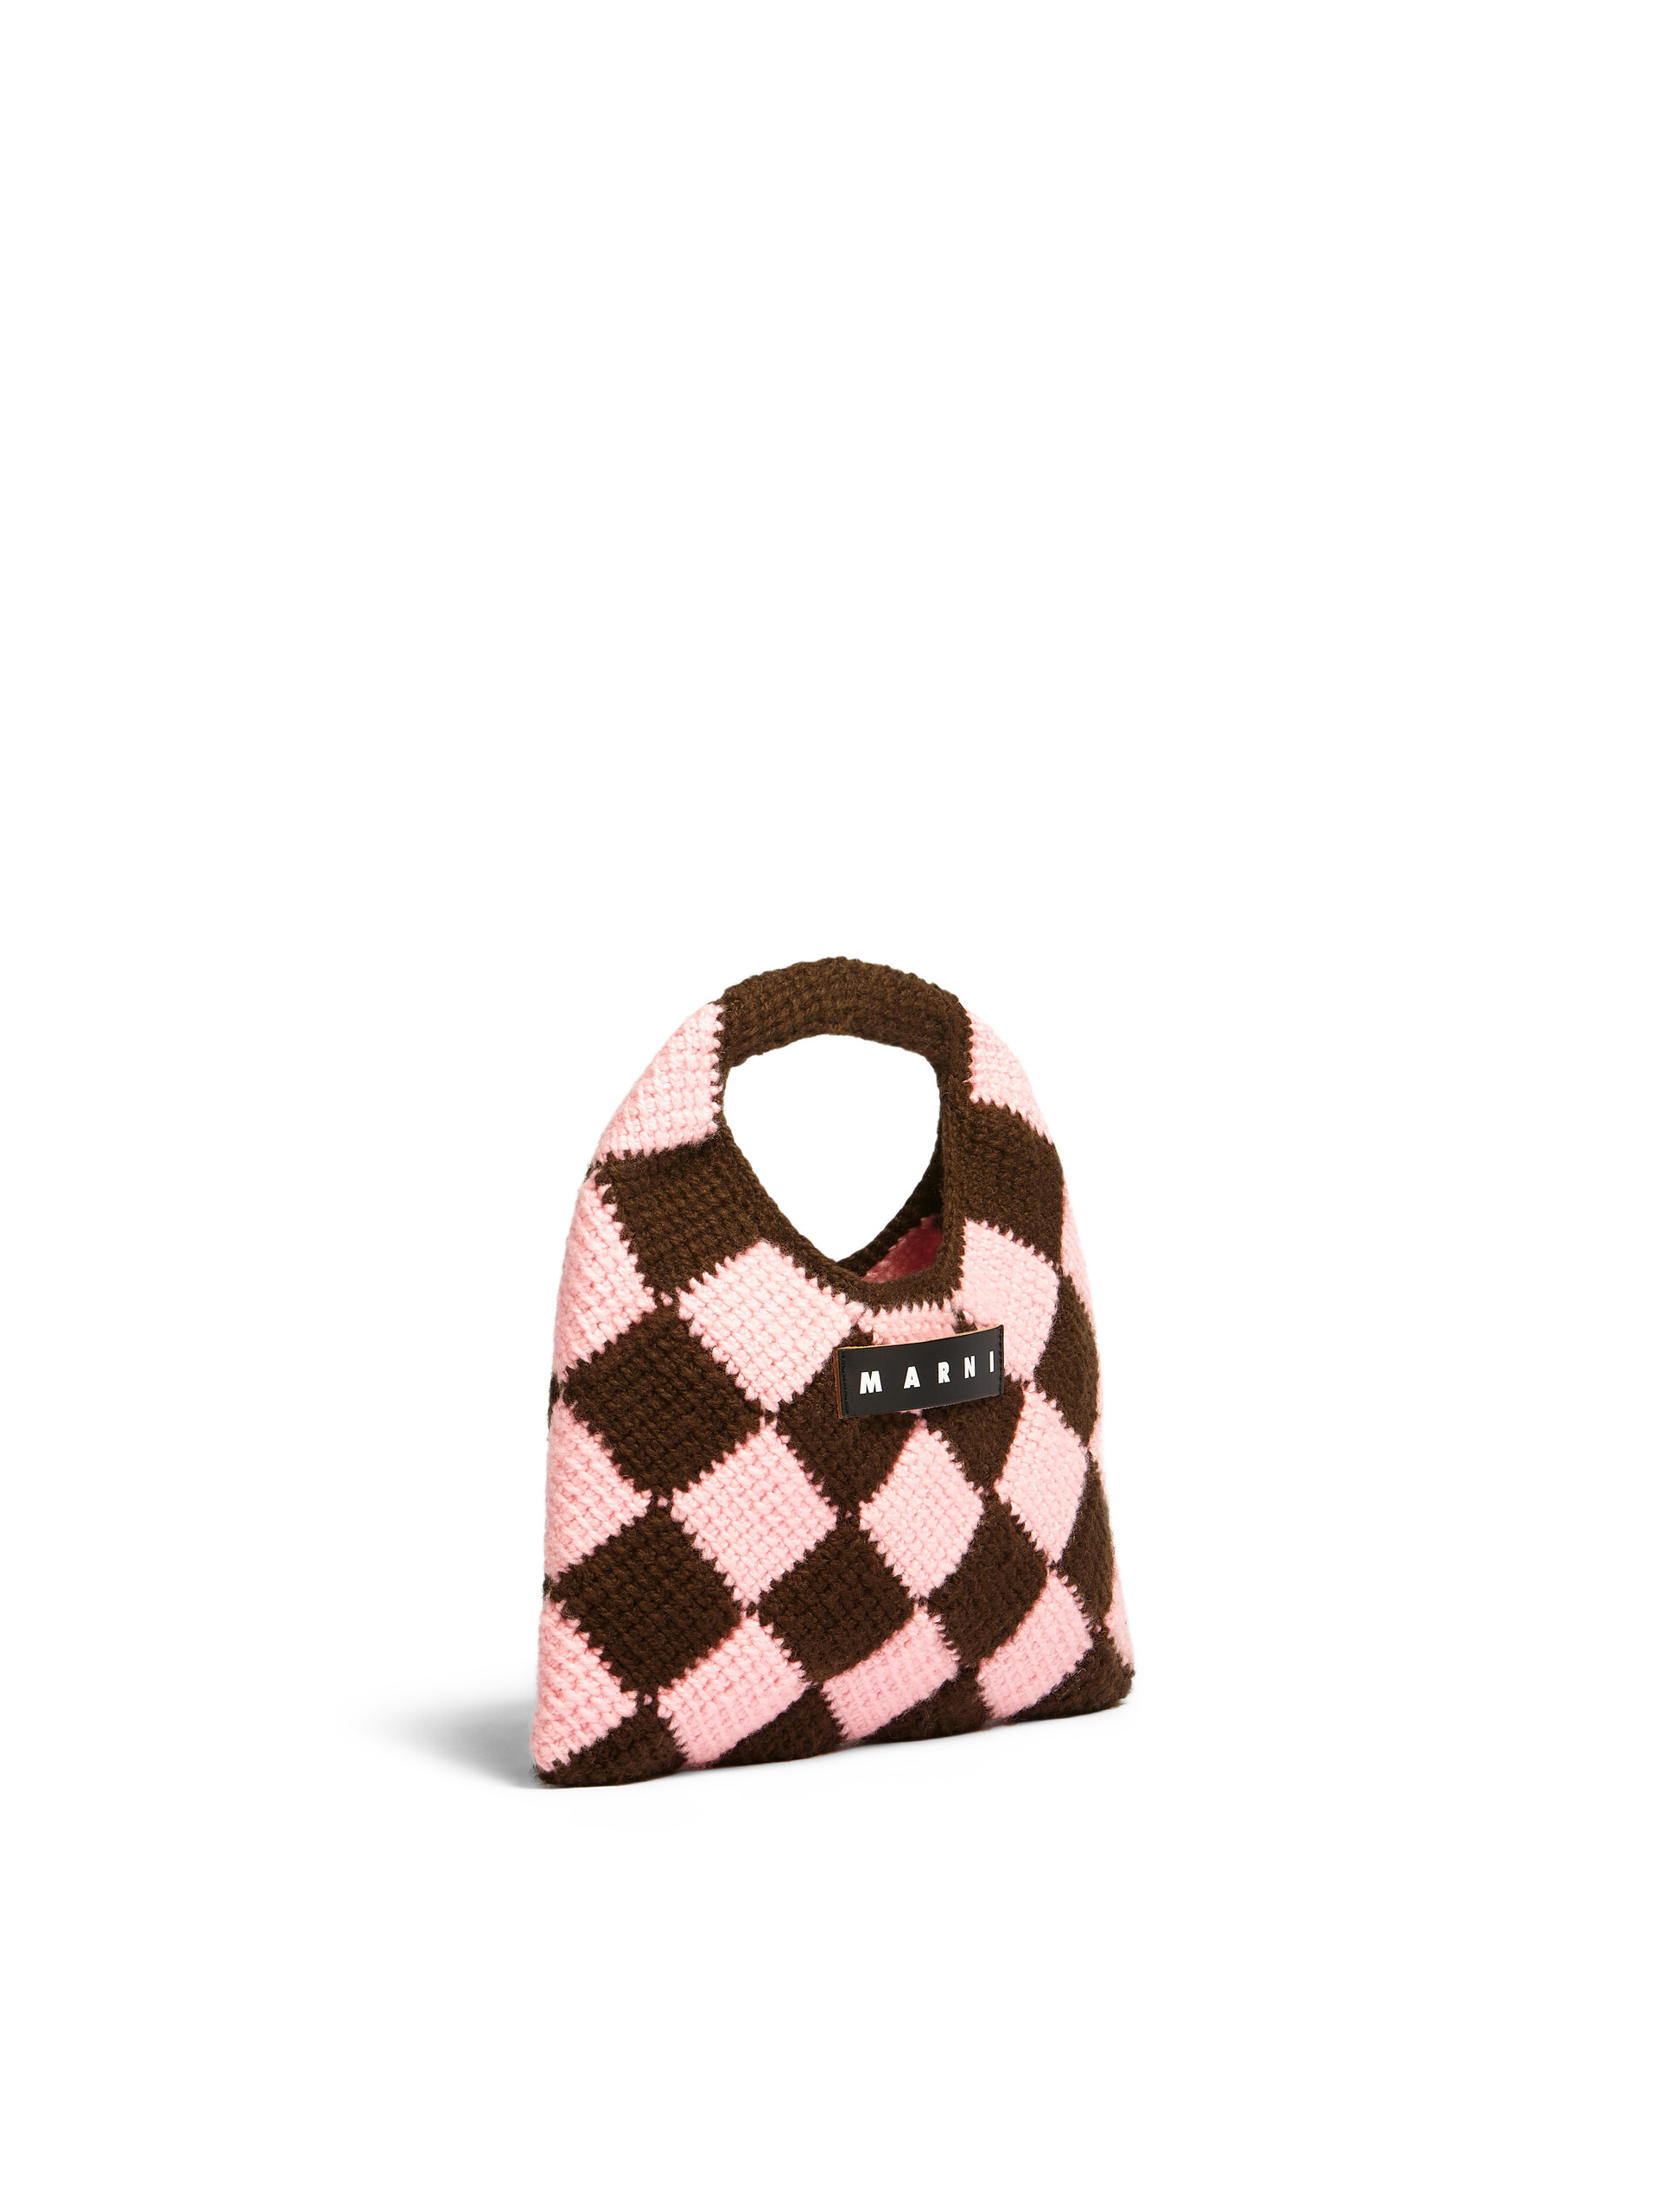 Small brown and pink tech wool MARNI MARKET bag - Bags - Image 2